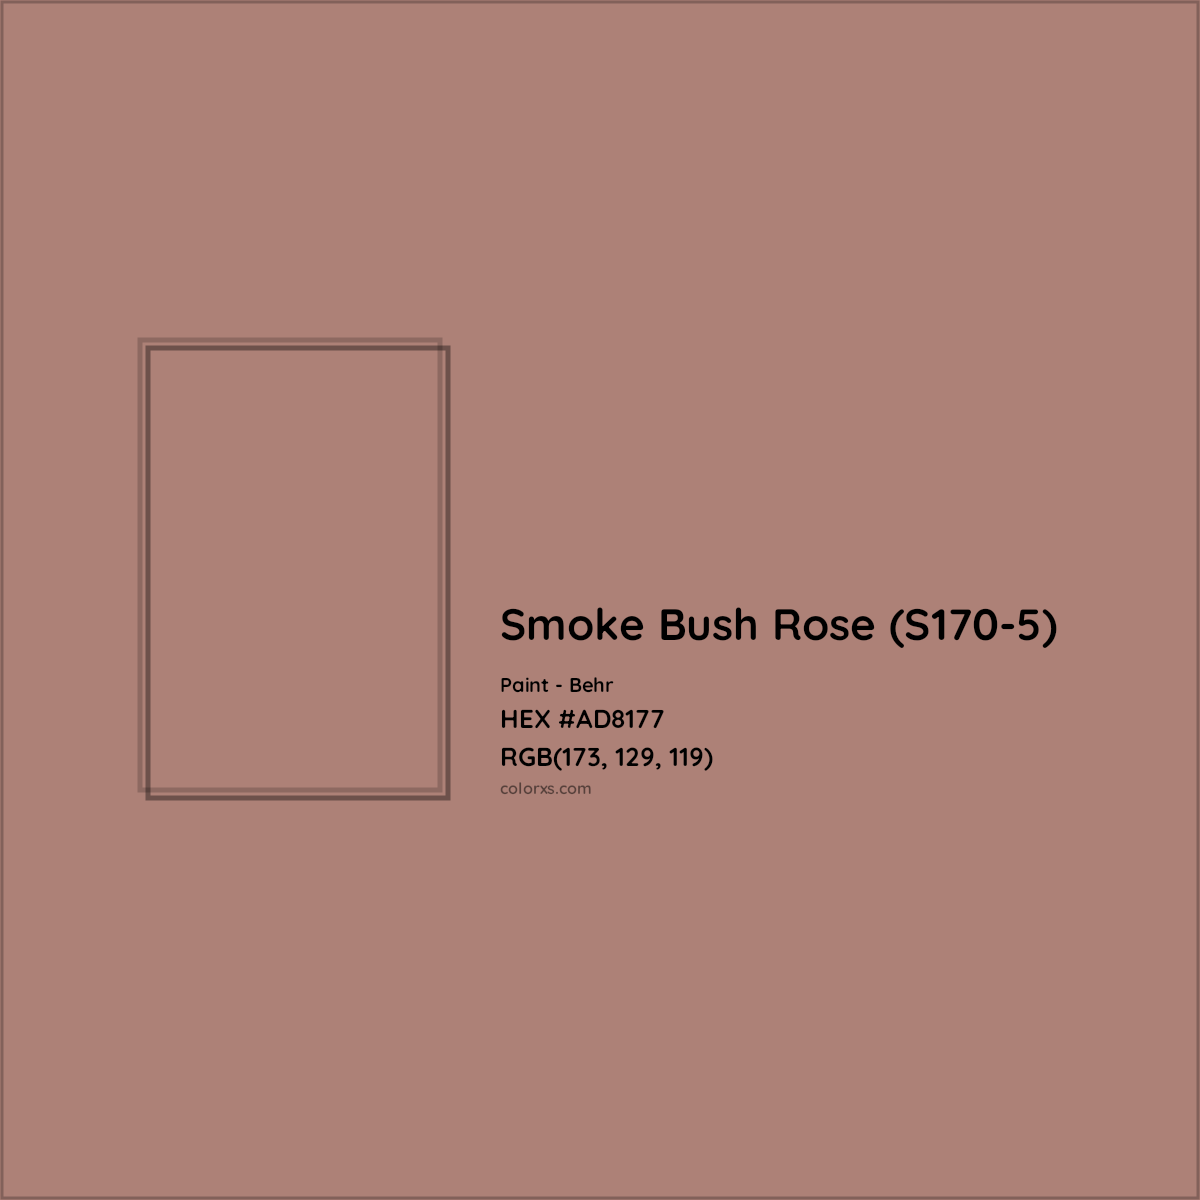 HEX #AD8177 Smoke Bush Rose (S170-5) Paint Behr - Color Code